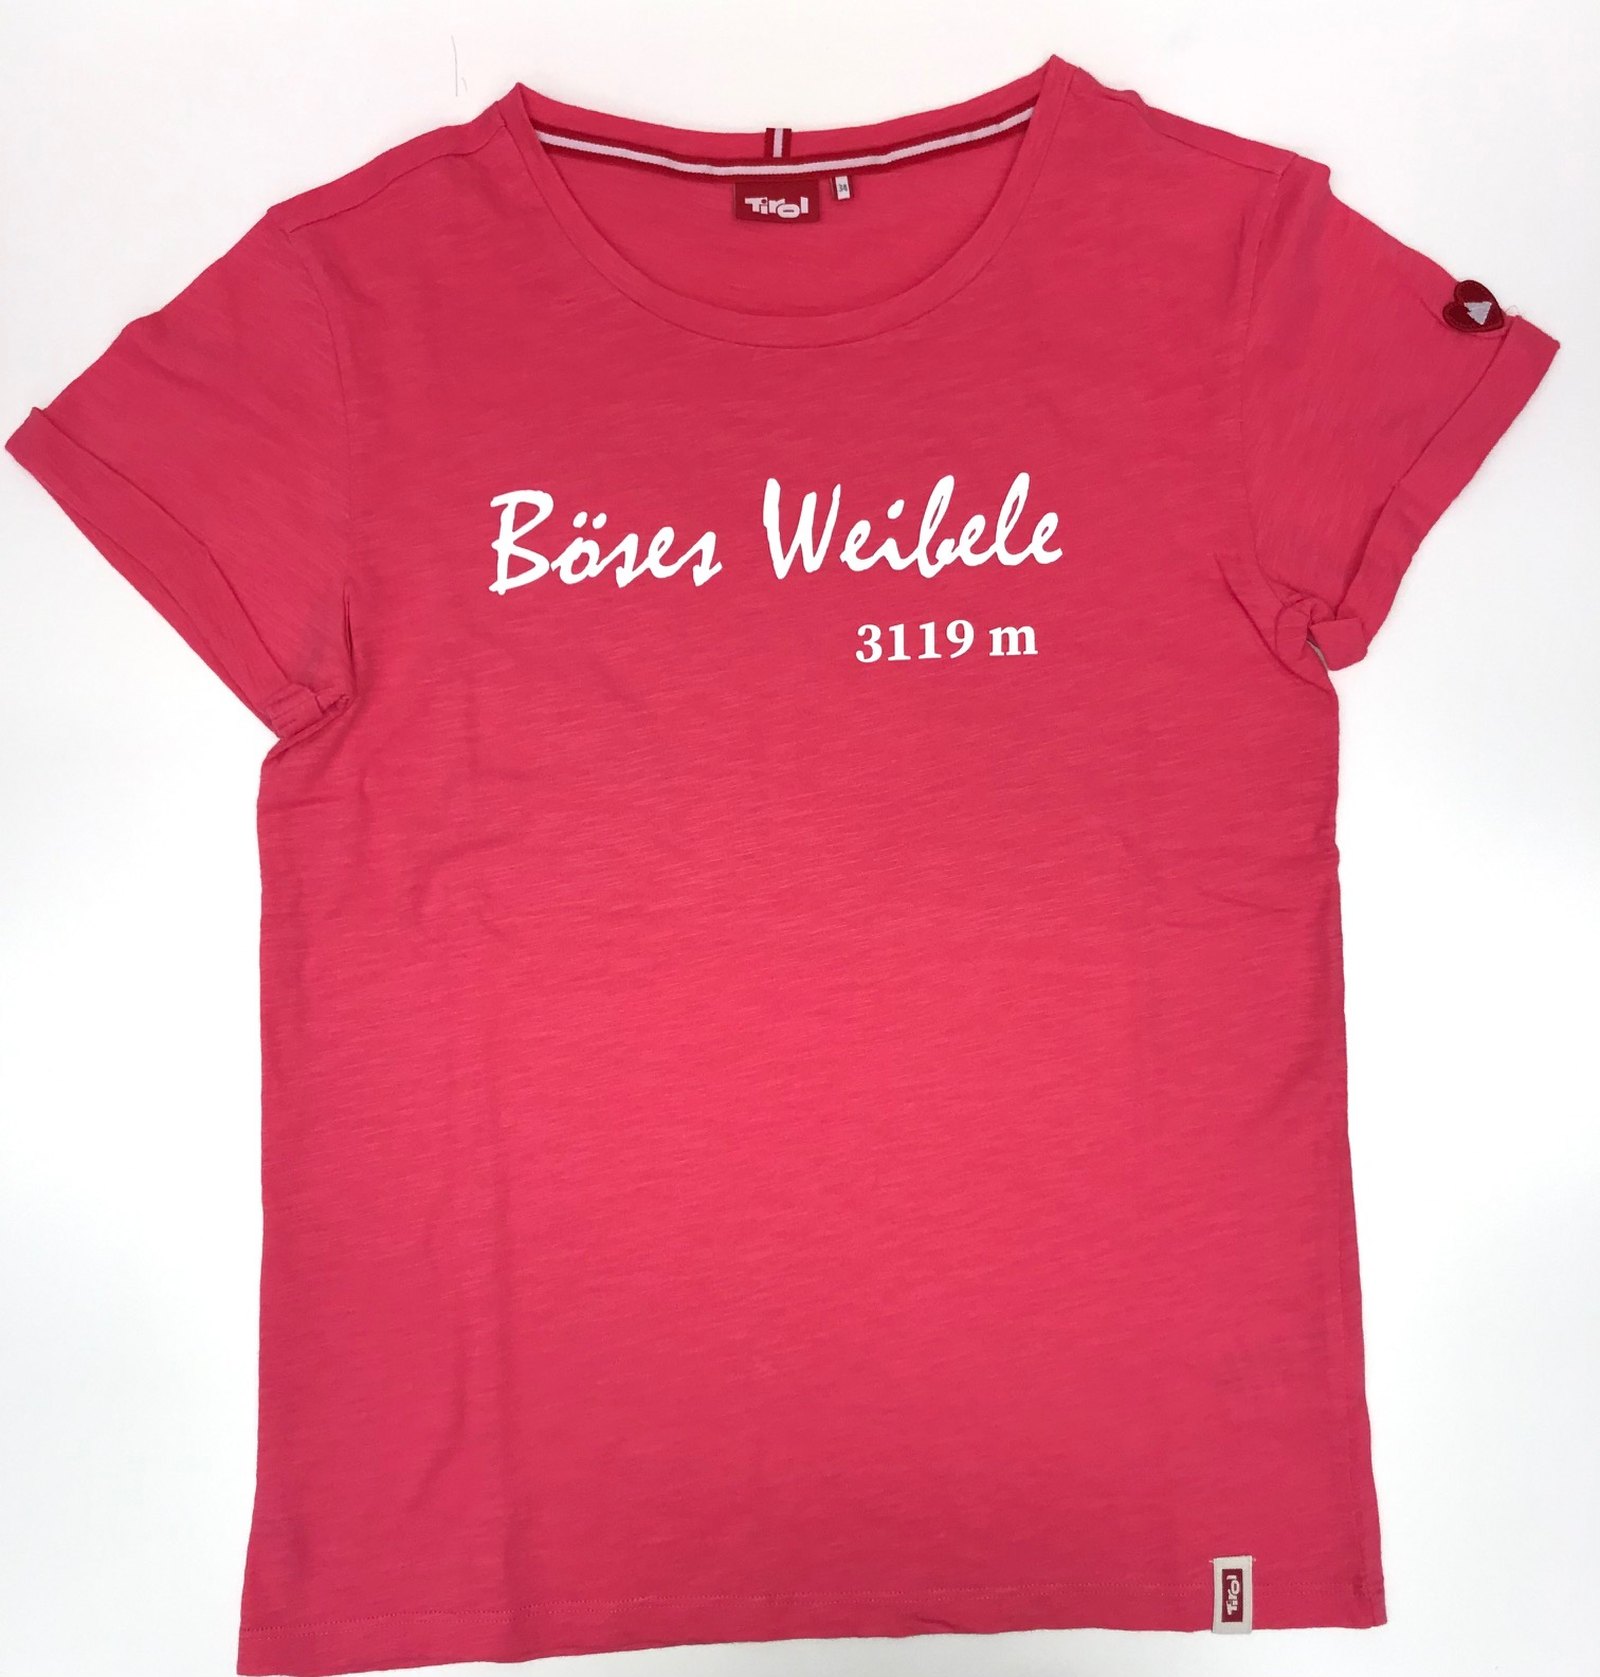 Damen T-Shirt Osttirol "Böses Weibele" koralle